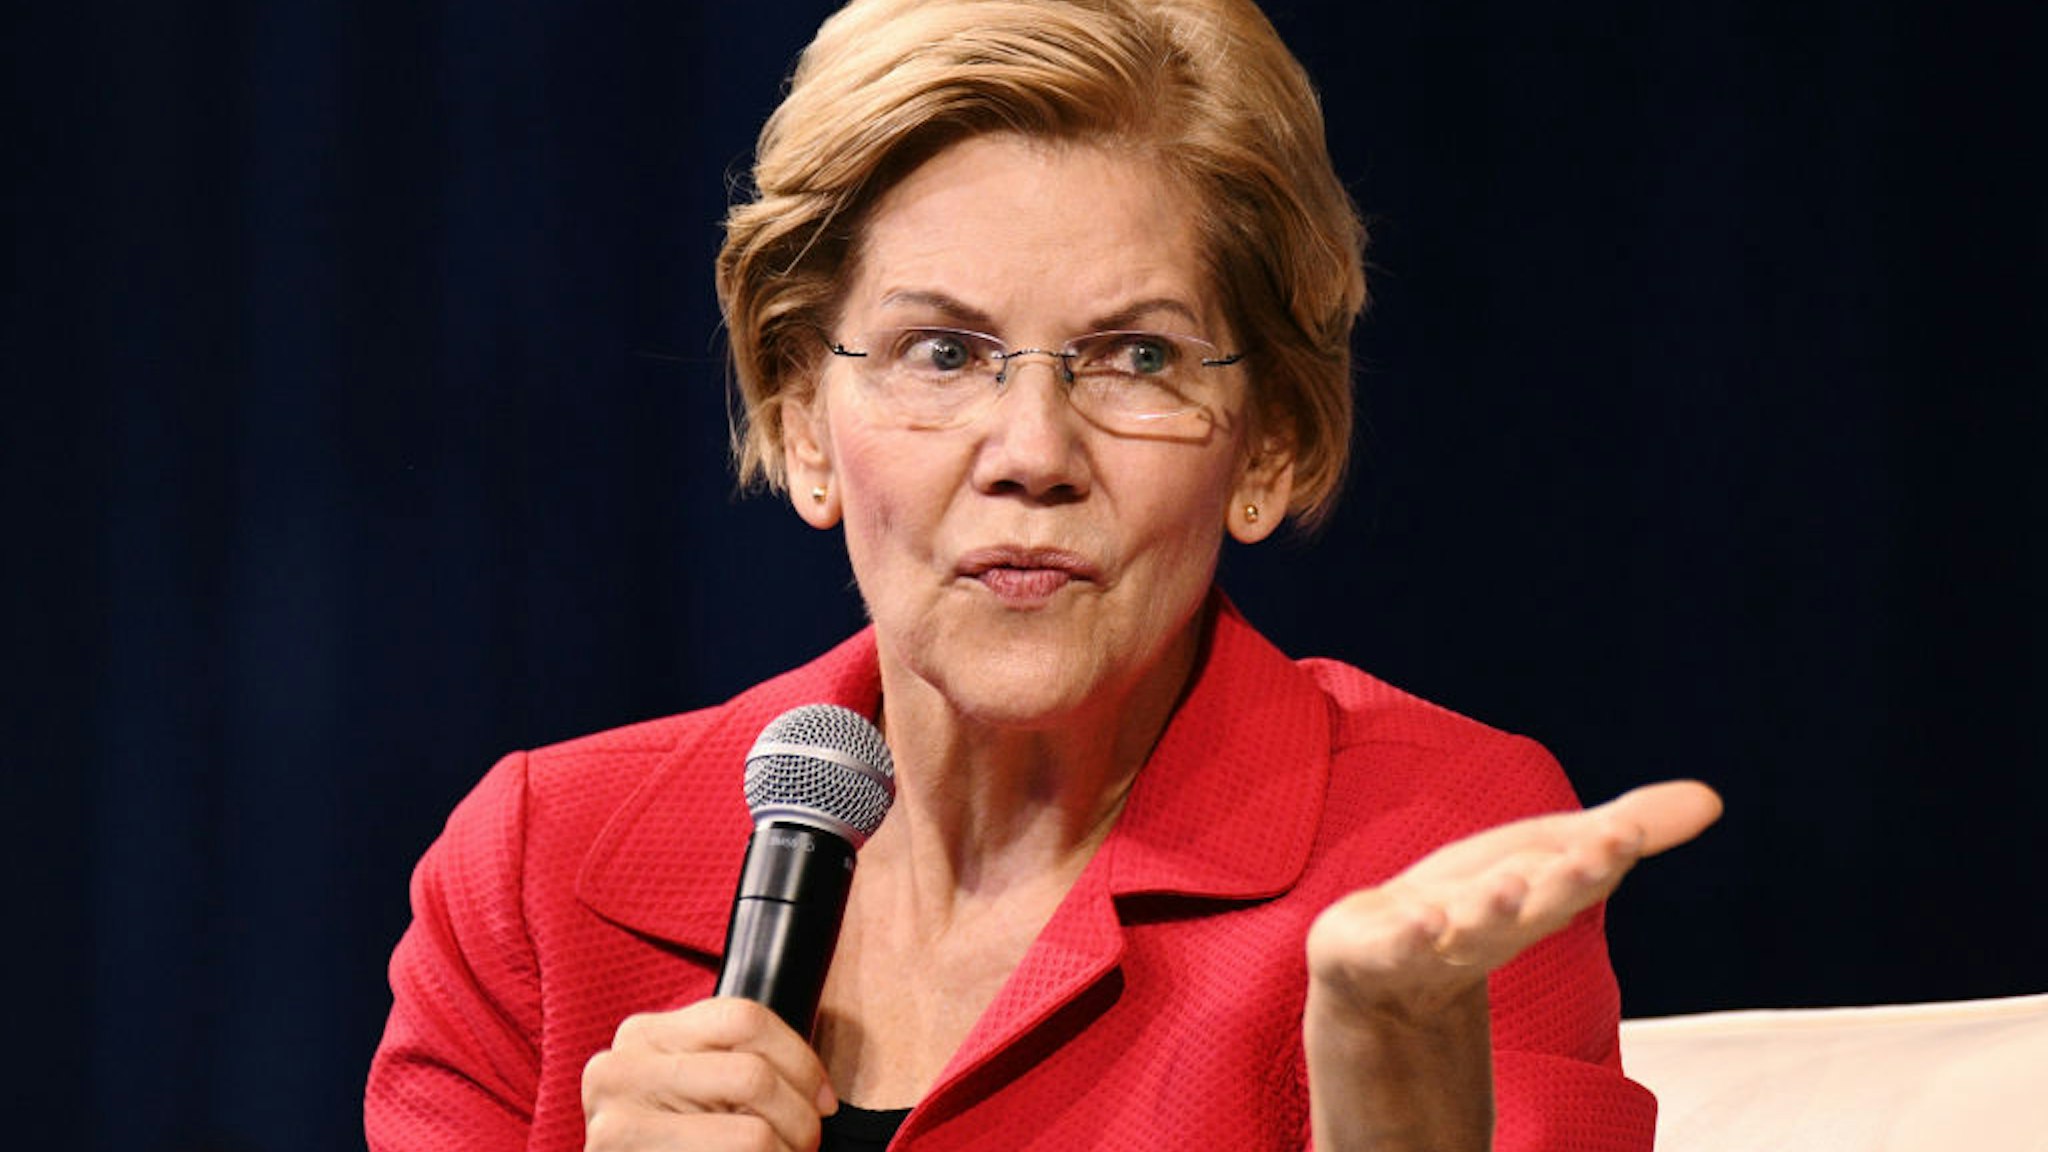 Senator Elizabeth Warren, a Democrat from Massachusetts and 2020 presidential candidate, speaks during the Presidential Gun Safety Forum in Las Vegas, Nevada, U.S., on Wednesday, Oct. 2, 2019.